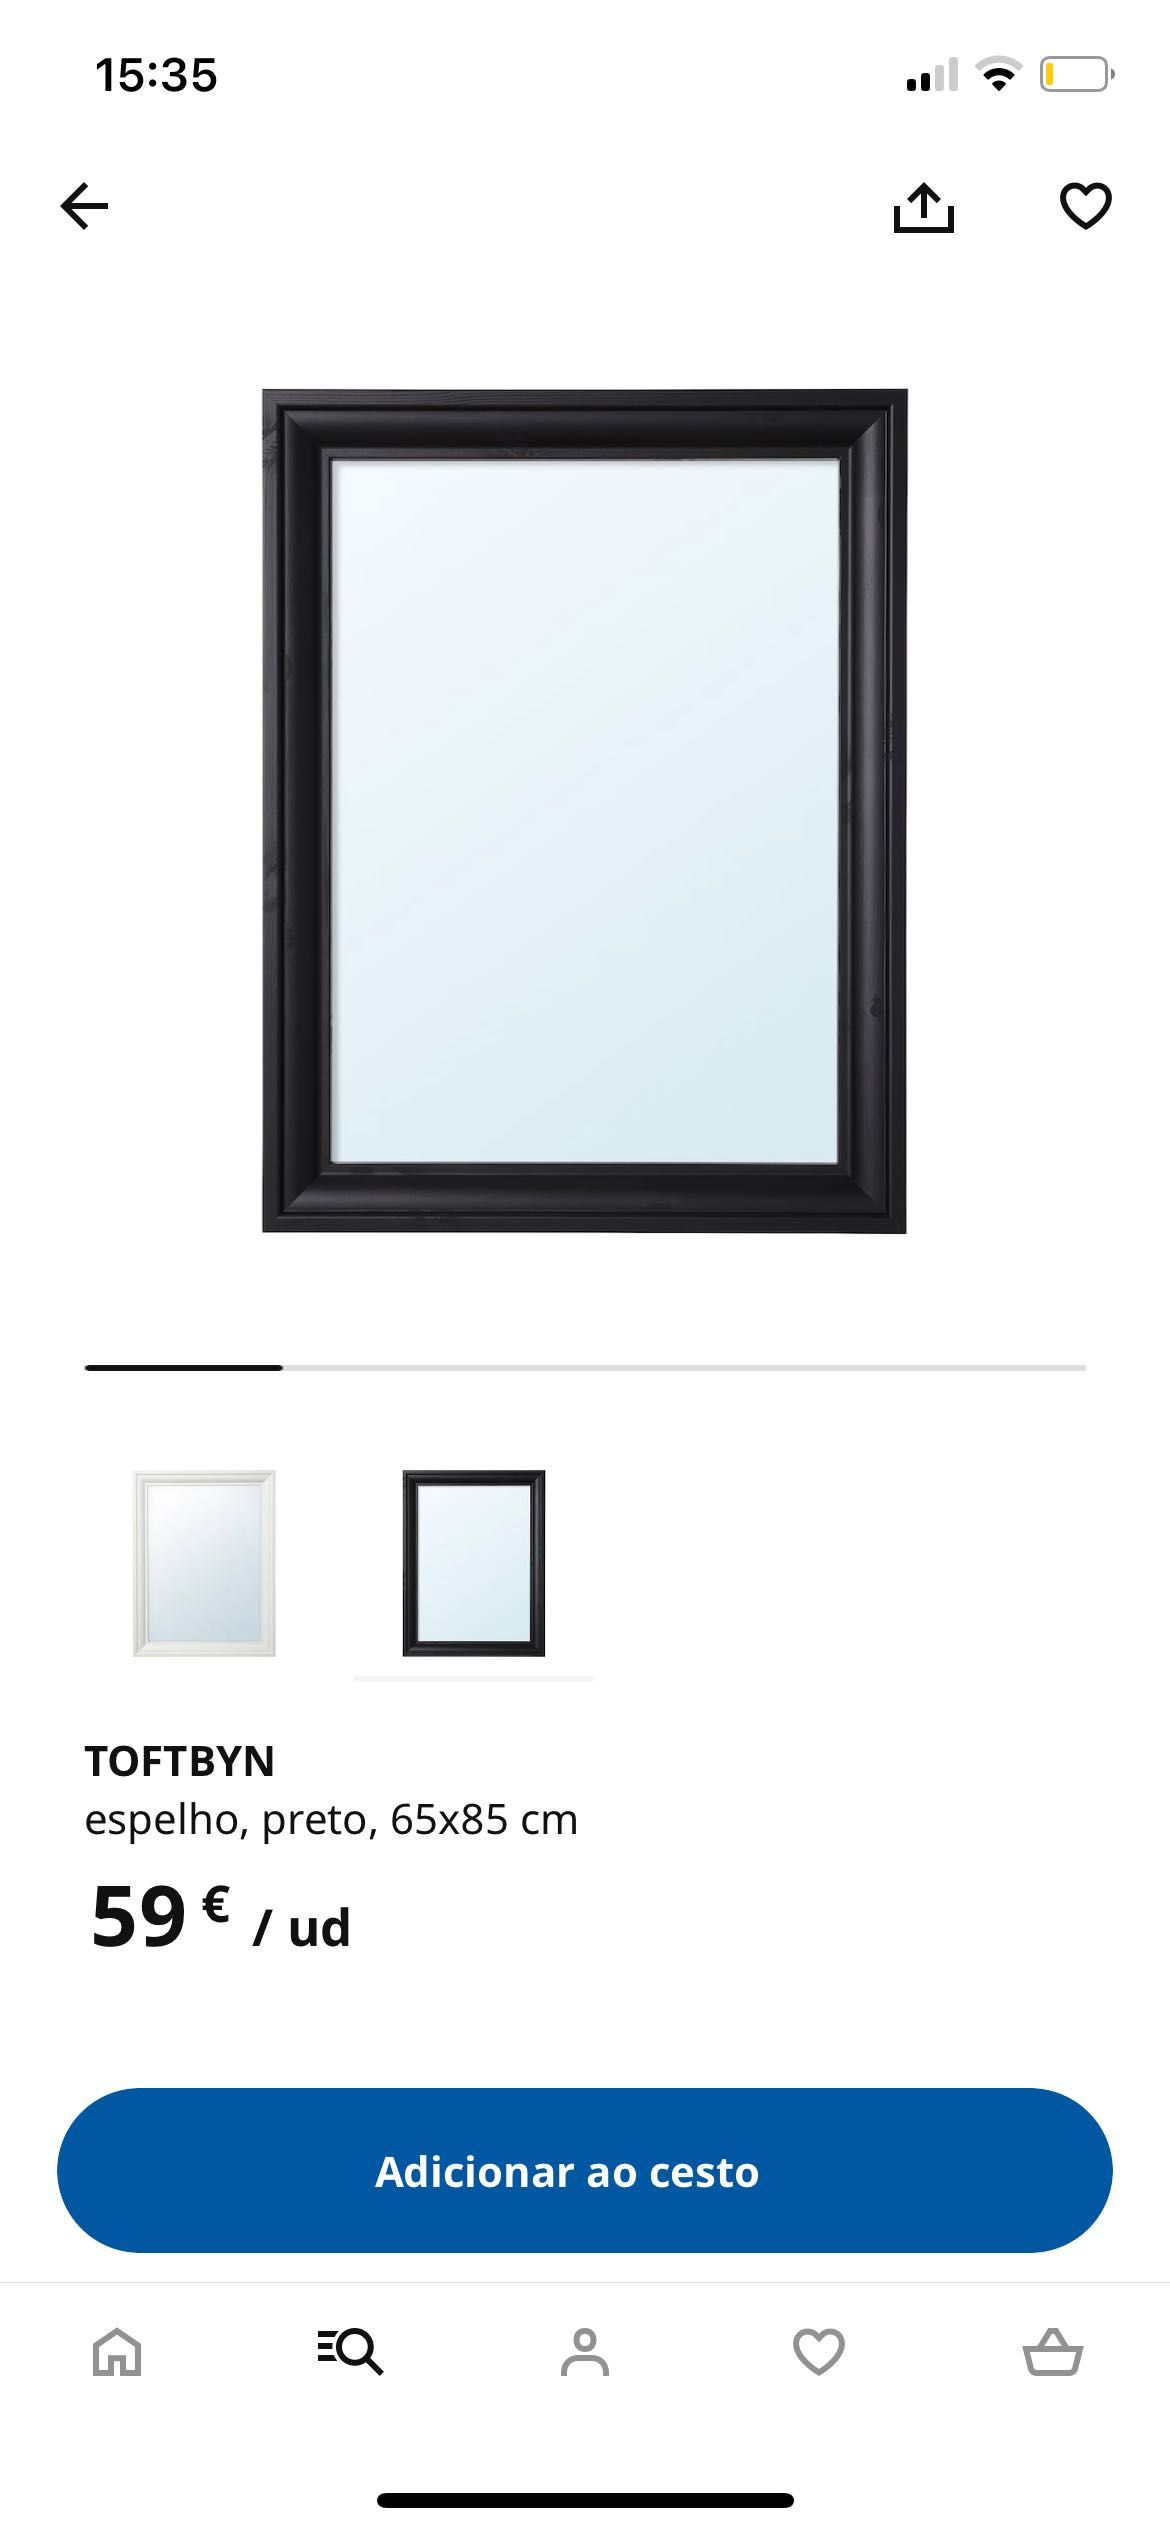 Espelho IKEA Toftbyn